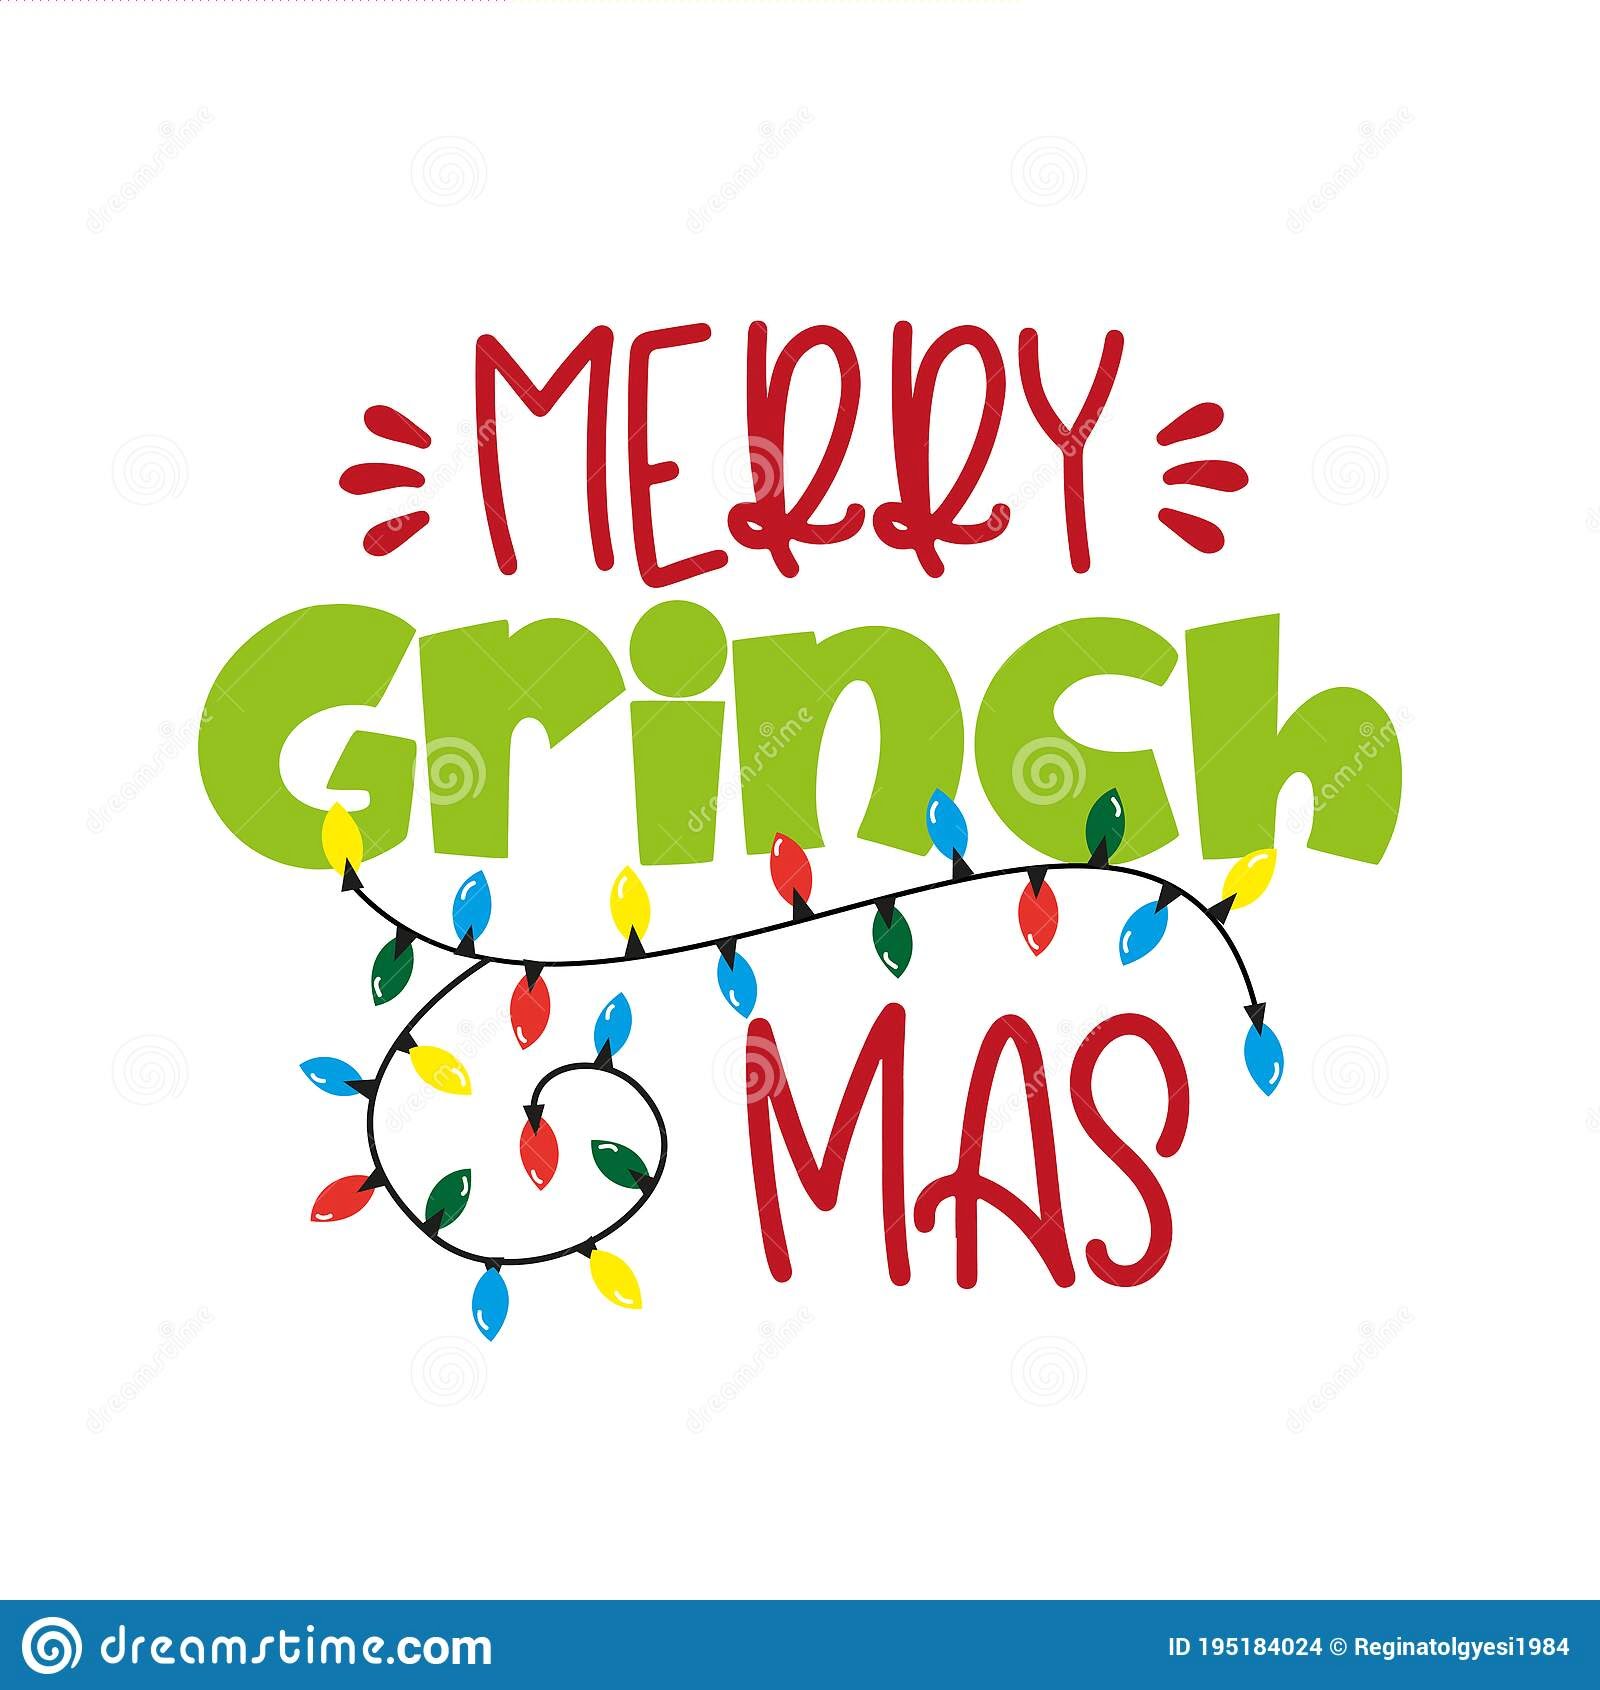 Printable Merry Grinchmas